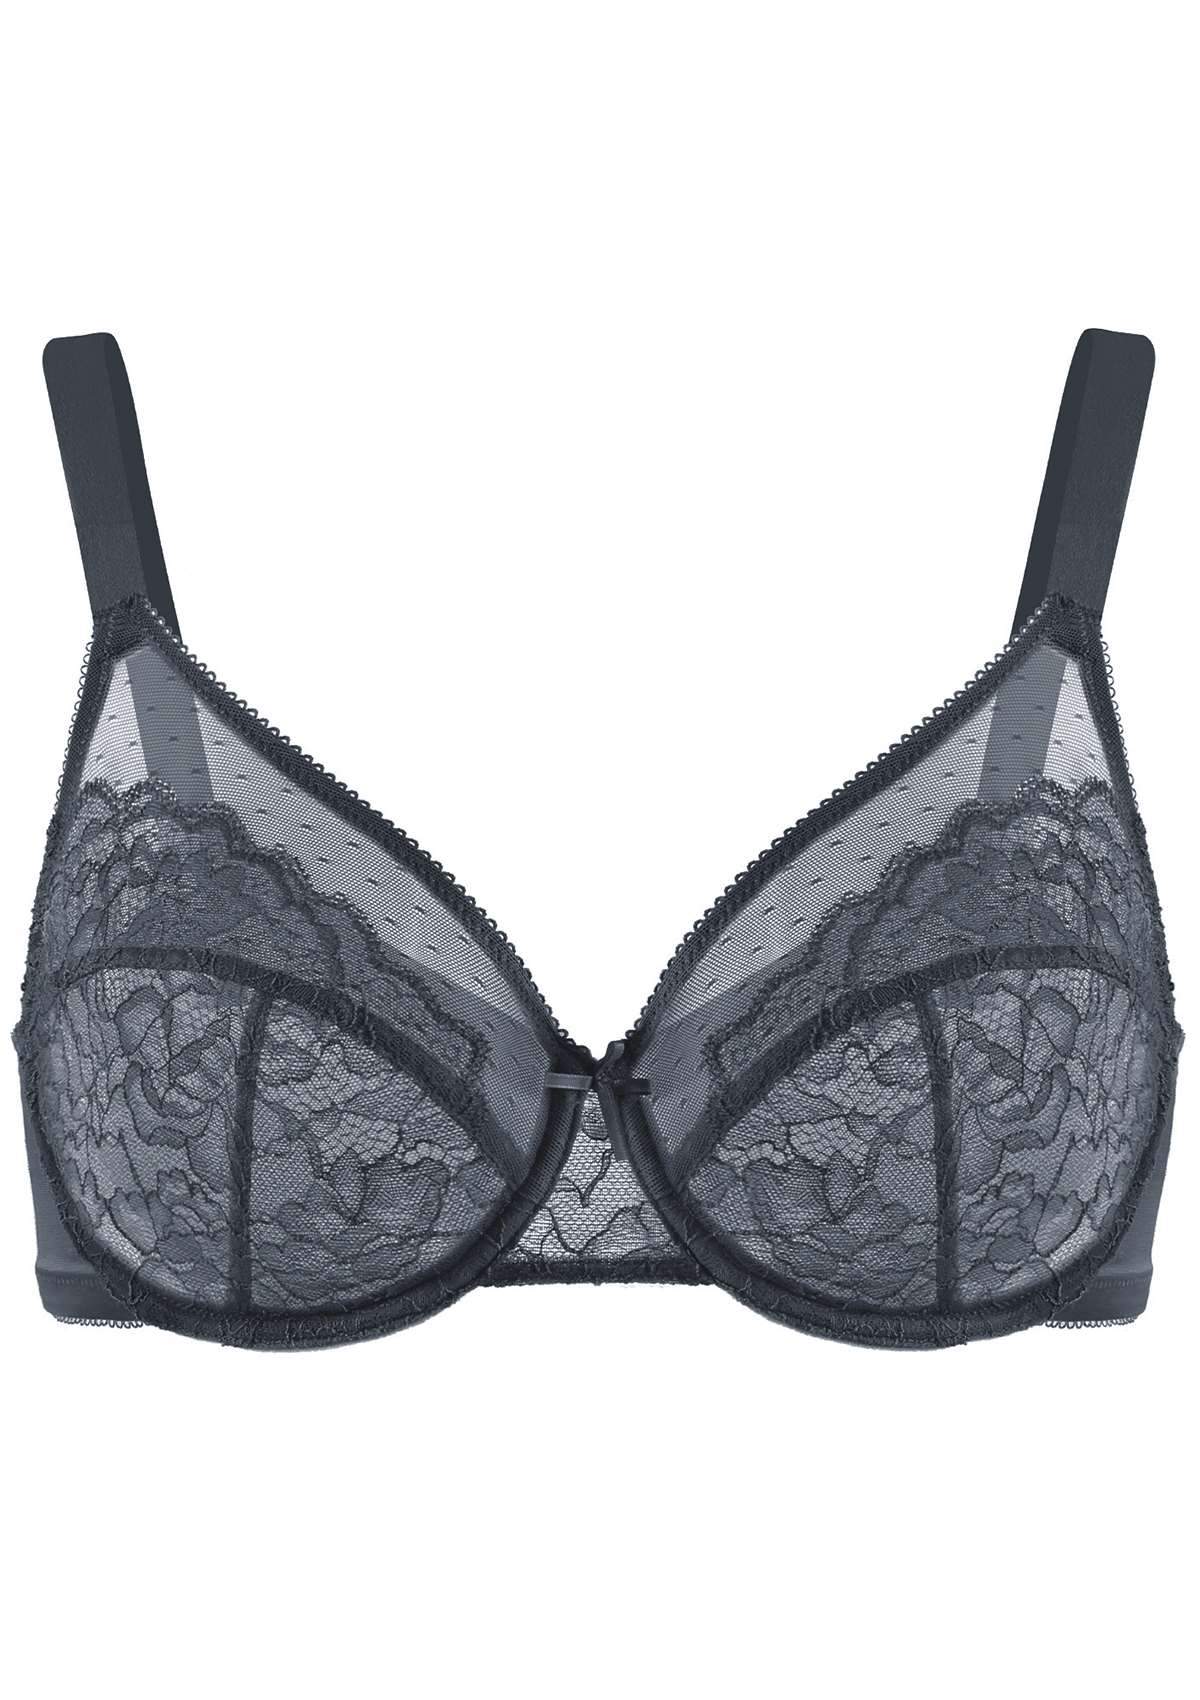 HSIA Enchante Matching Bra And Underwear Sets: Uplift Big Boobs Bra - Dark Gray / 38 / C